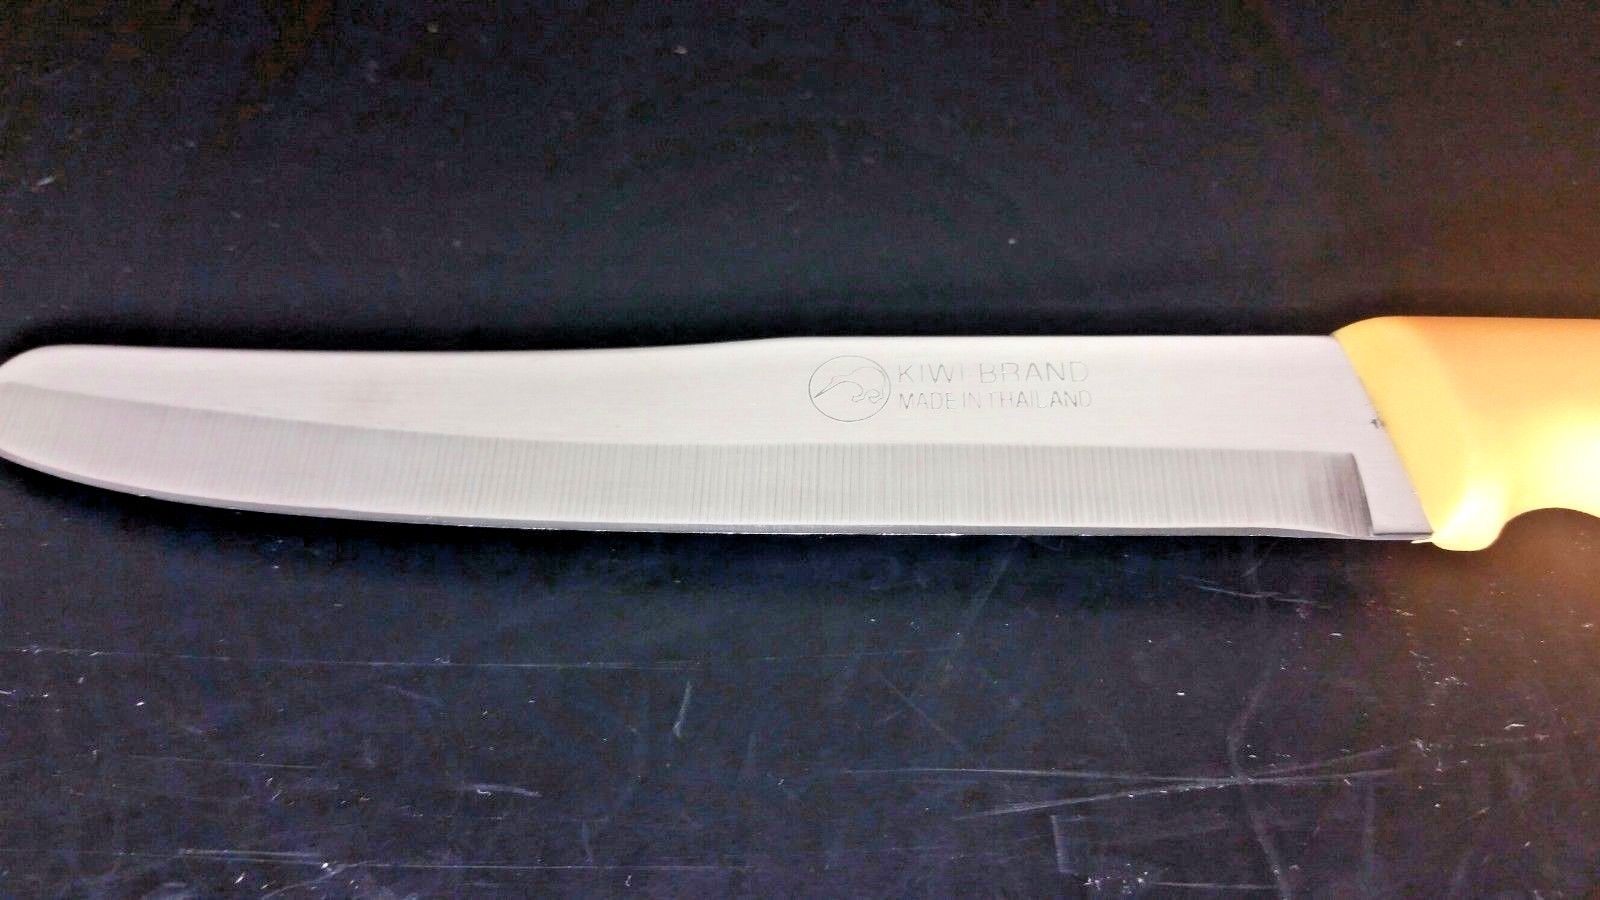 Kitchen Knives Thai Kiwi Set Stainless Steel Sharp Blade Plastic Handle 5  Size